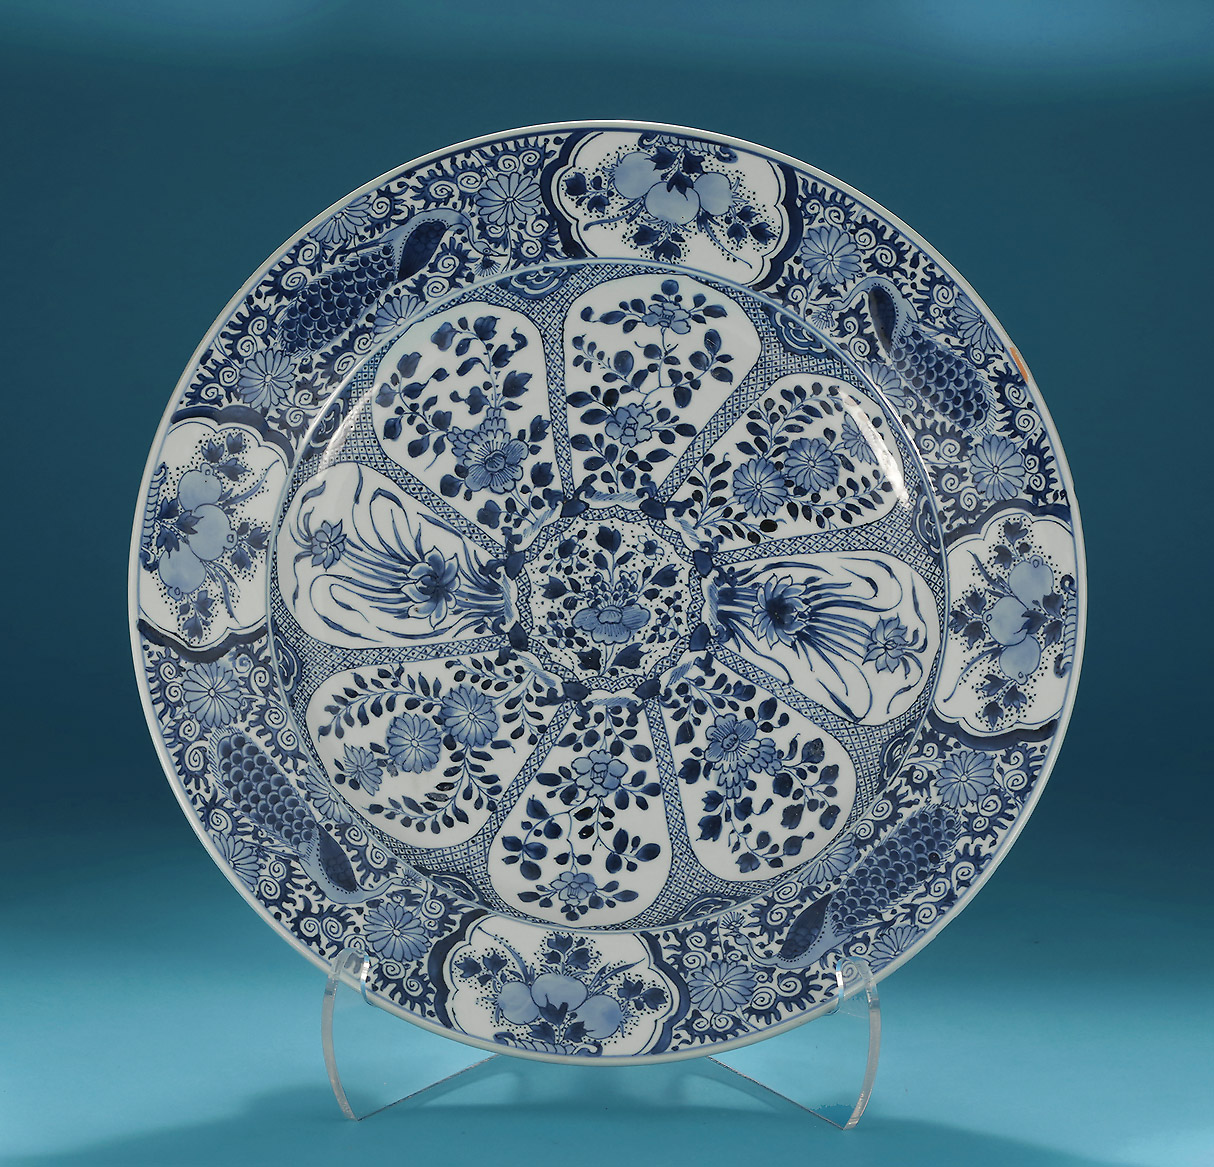 Kangxi Blue & White Porcelain Peacocks Large Dish (Charger), China, c1662-1722 